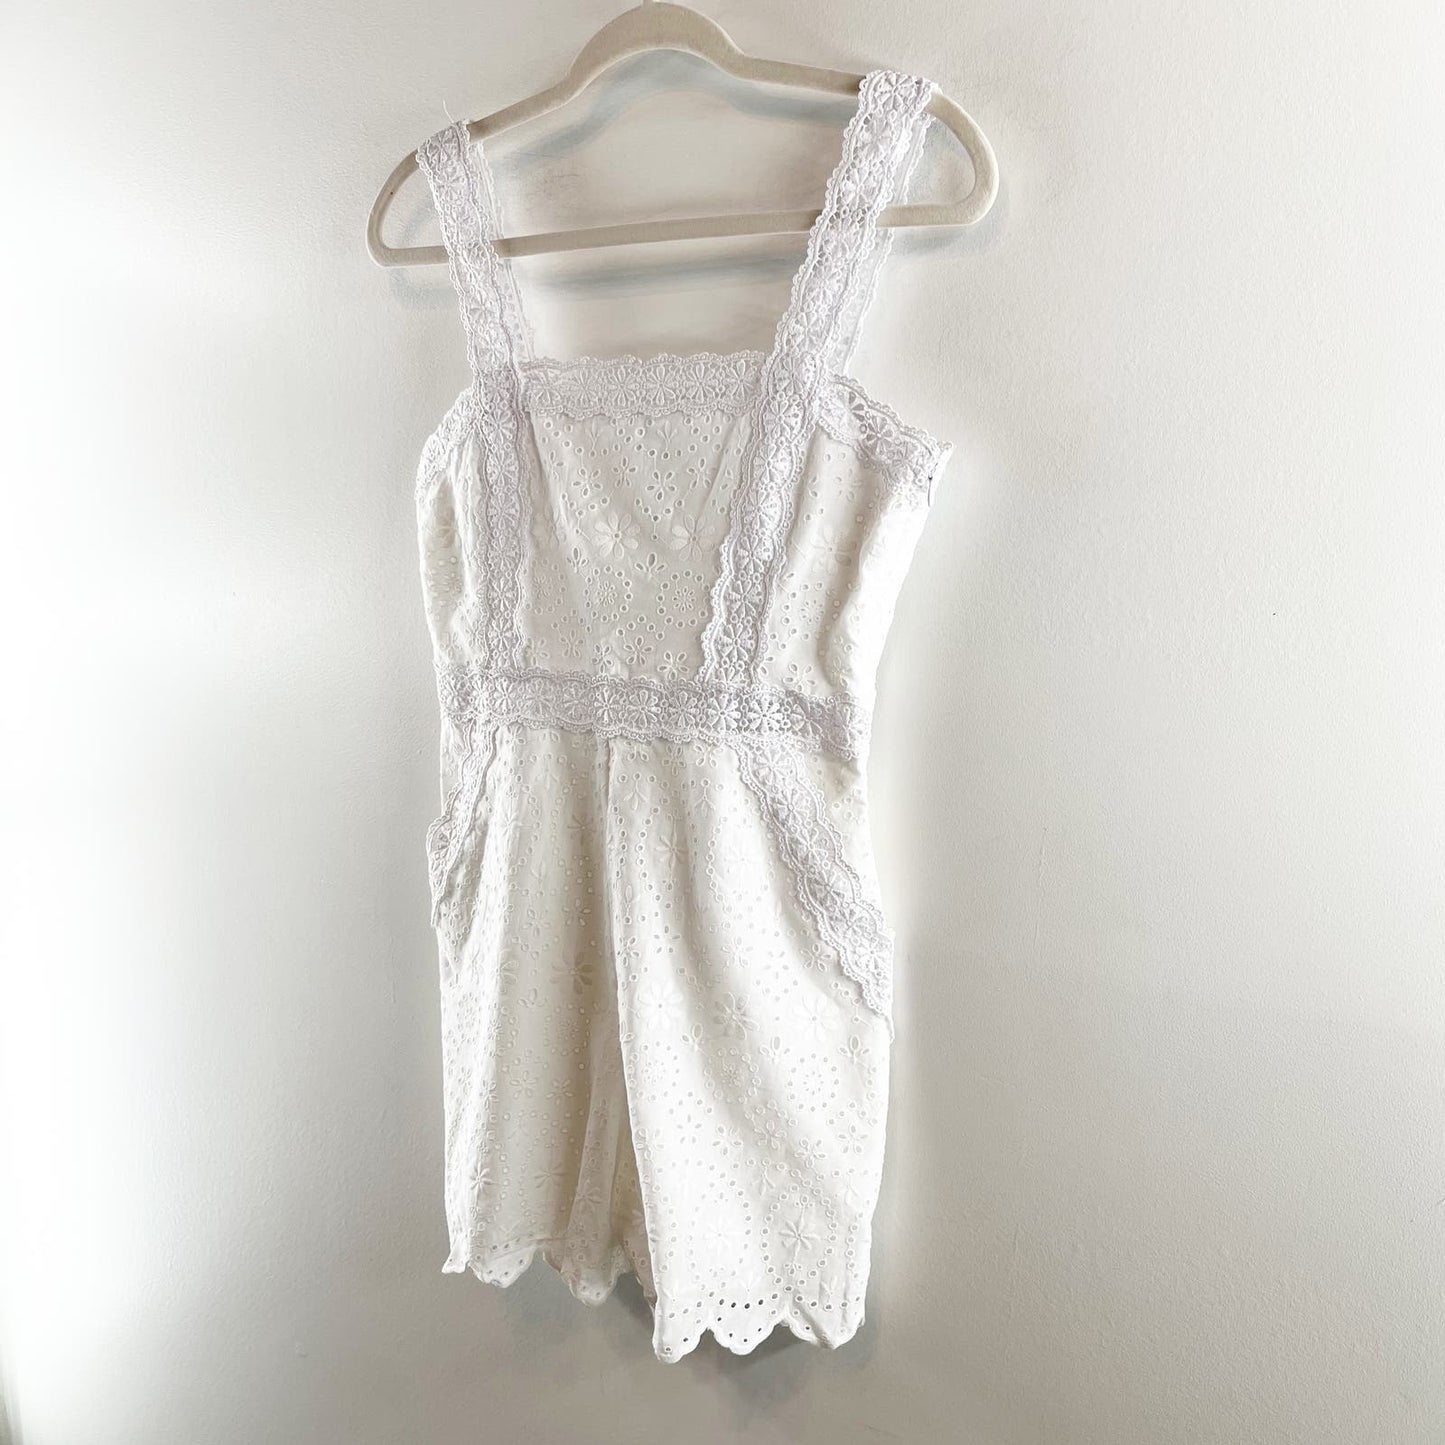 Charo Ruiz Ibiza Zuma Crocheted Lace Cotton Blend Jumpsuit Romper White Small